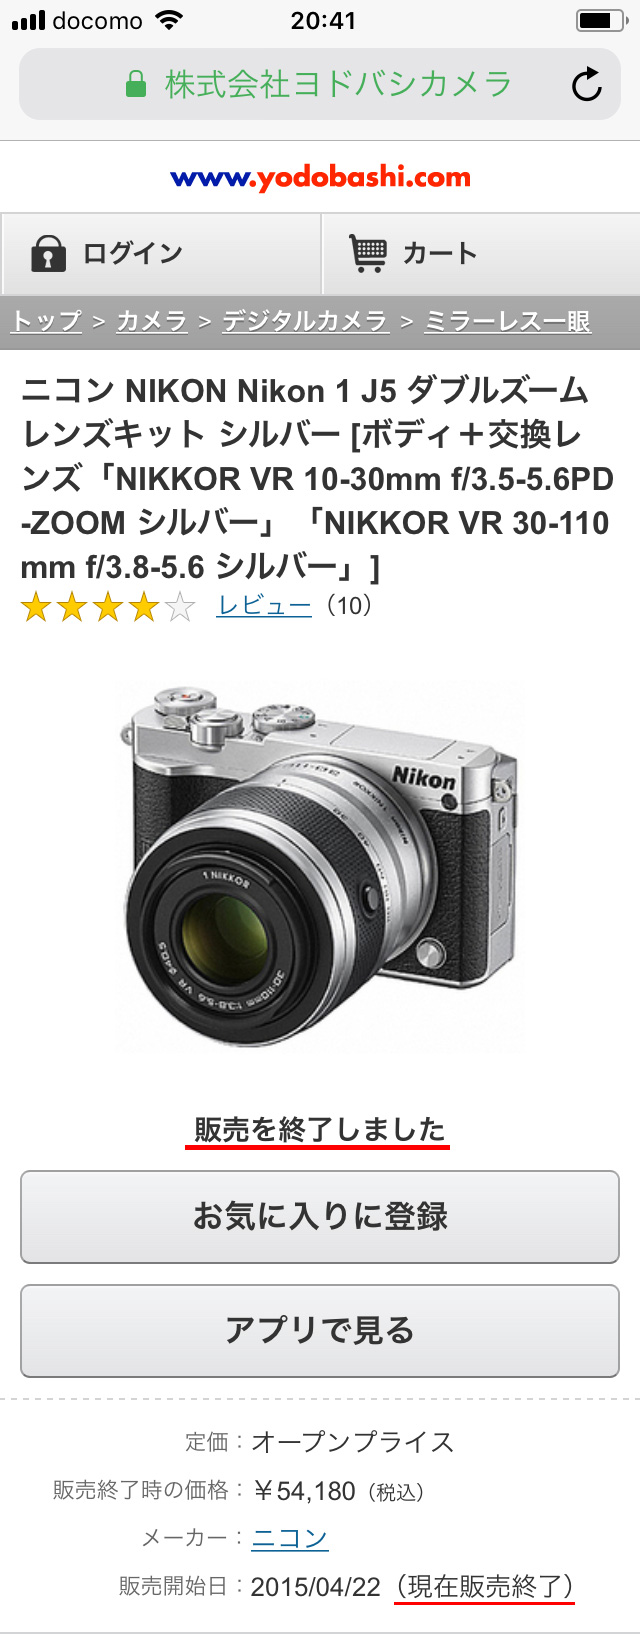 Nikon 1 J5 ついに量販店で販売終了の動きあり すでに生産完了し店頭在庫のみの可能性 デジカメライフ